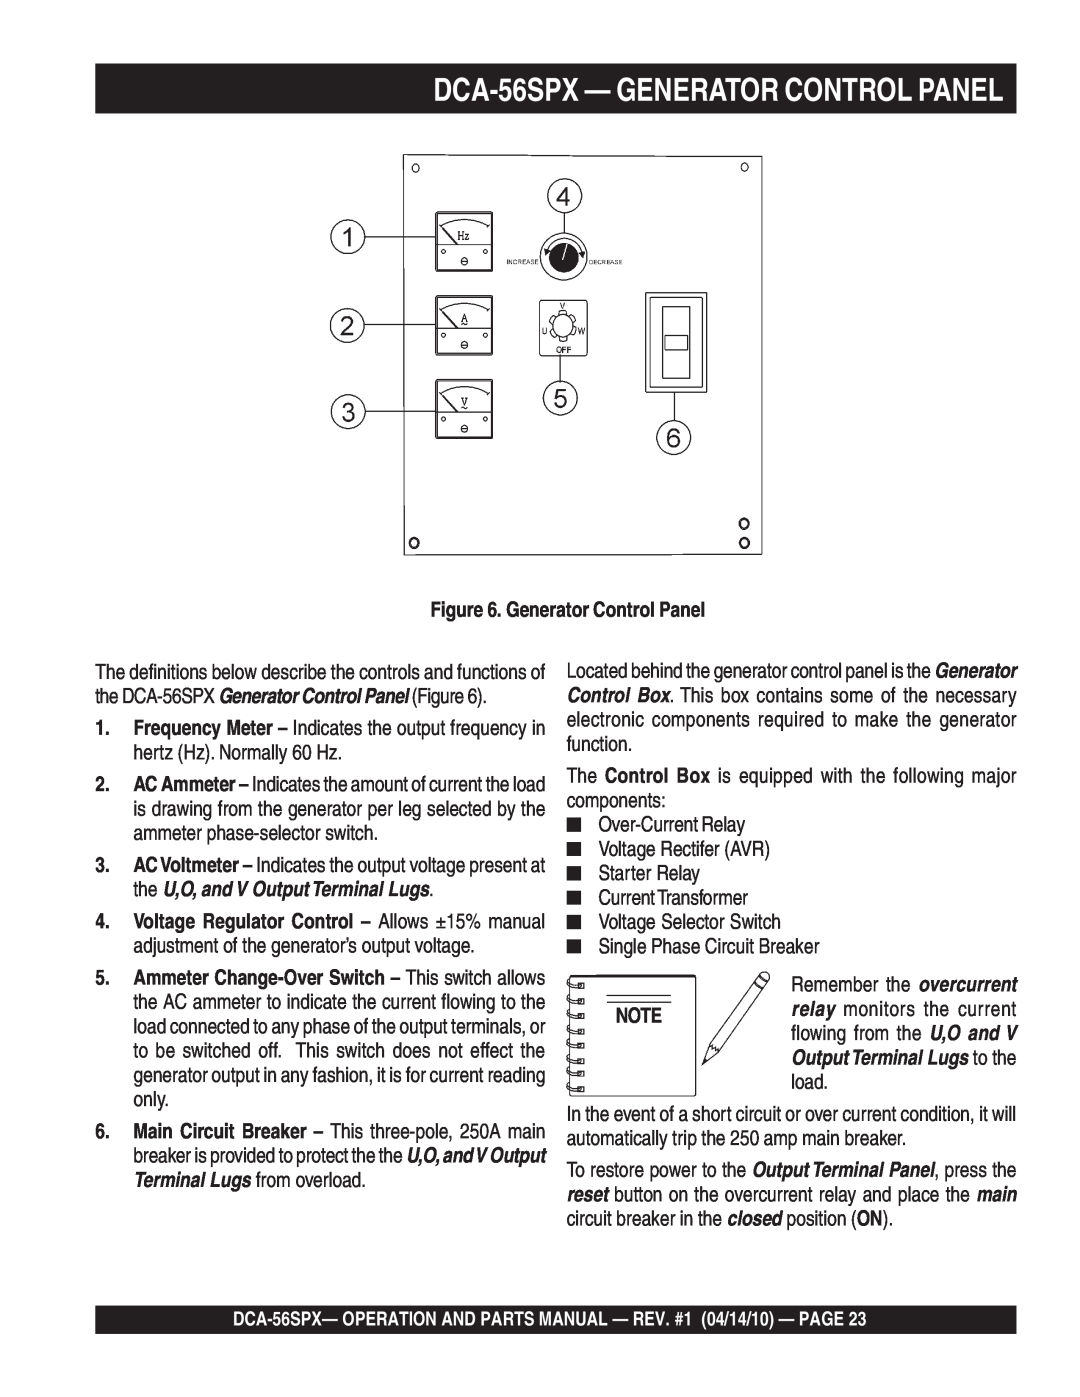 Multiquip operation manual DCA-56SPX- GENERATOR CONTROL PANEL, Generator Control Panel 